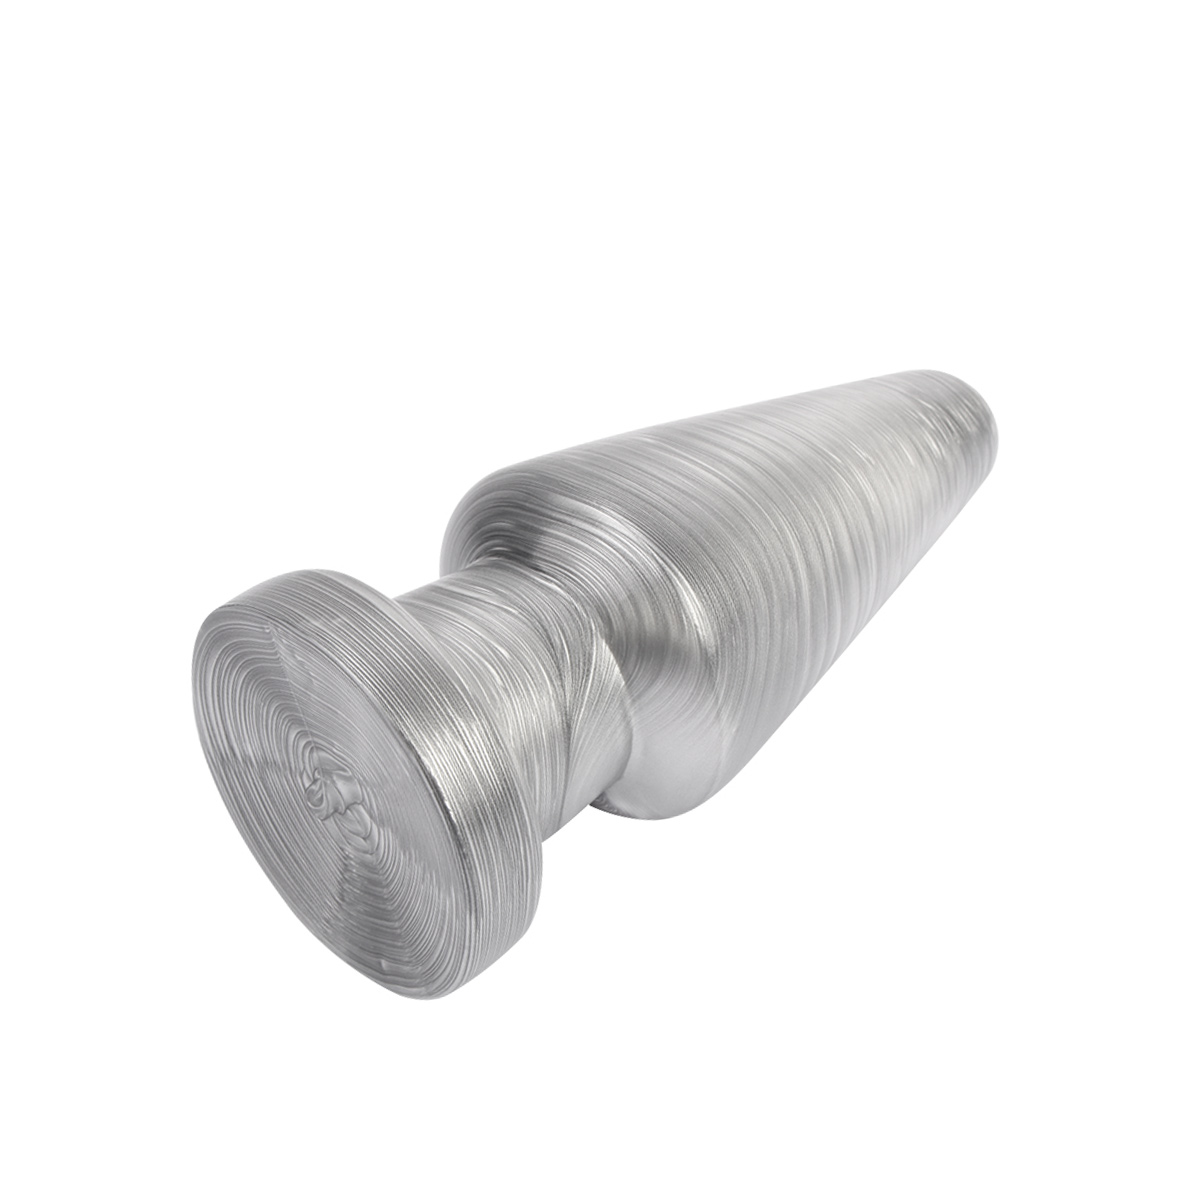 Silver-Bump-Canaan-Plug-OPR-2980149-2